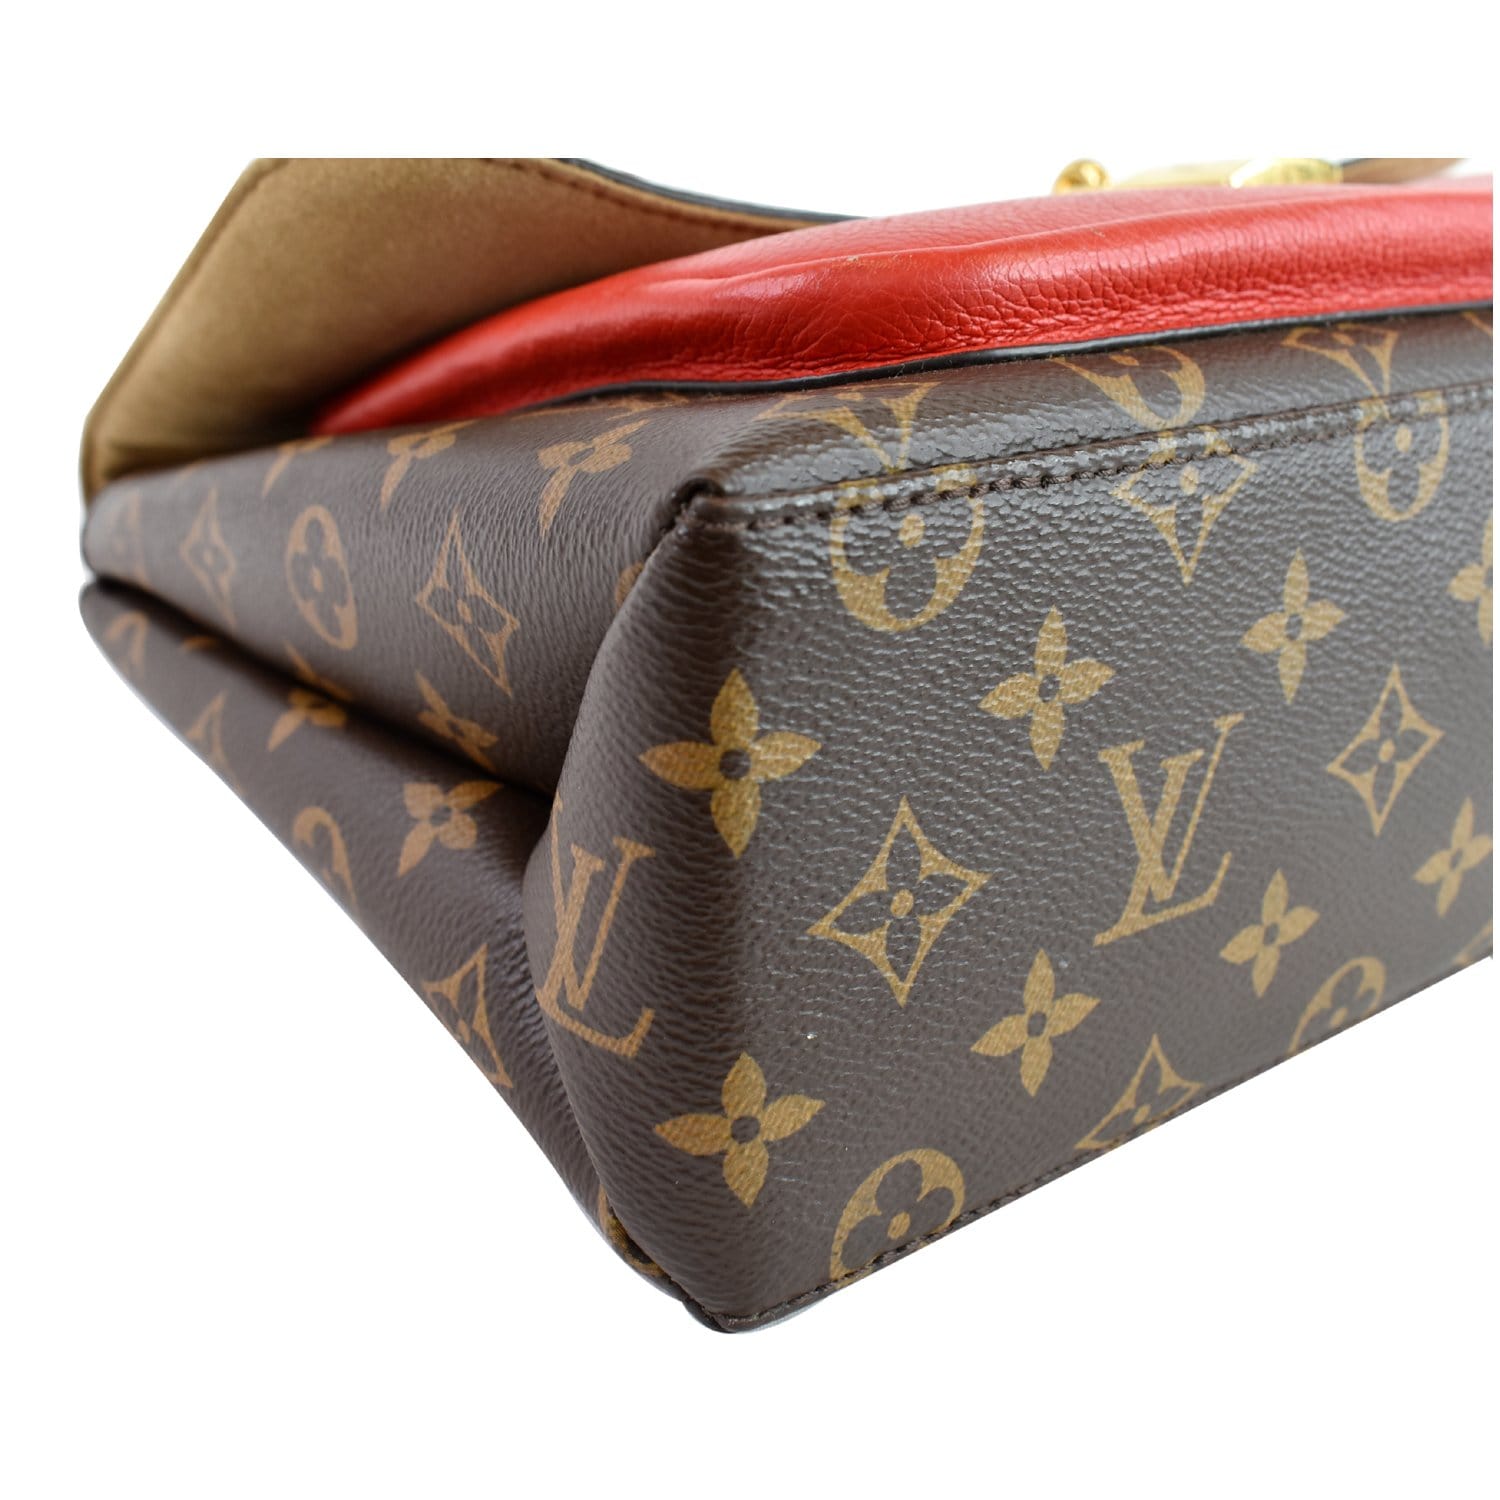 Louis Vuitton Monogram Marignan Bag